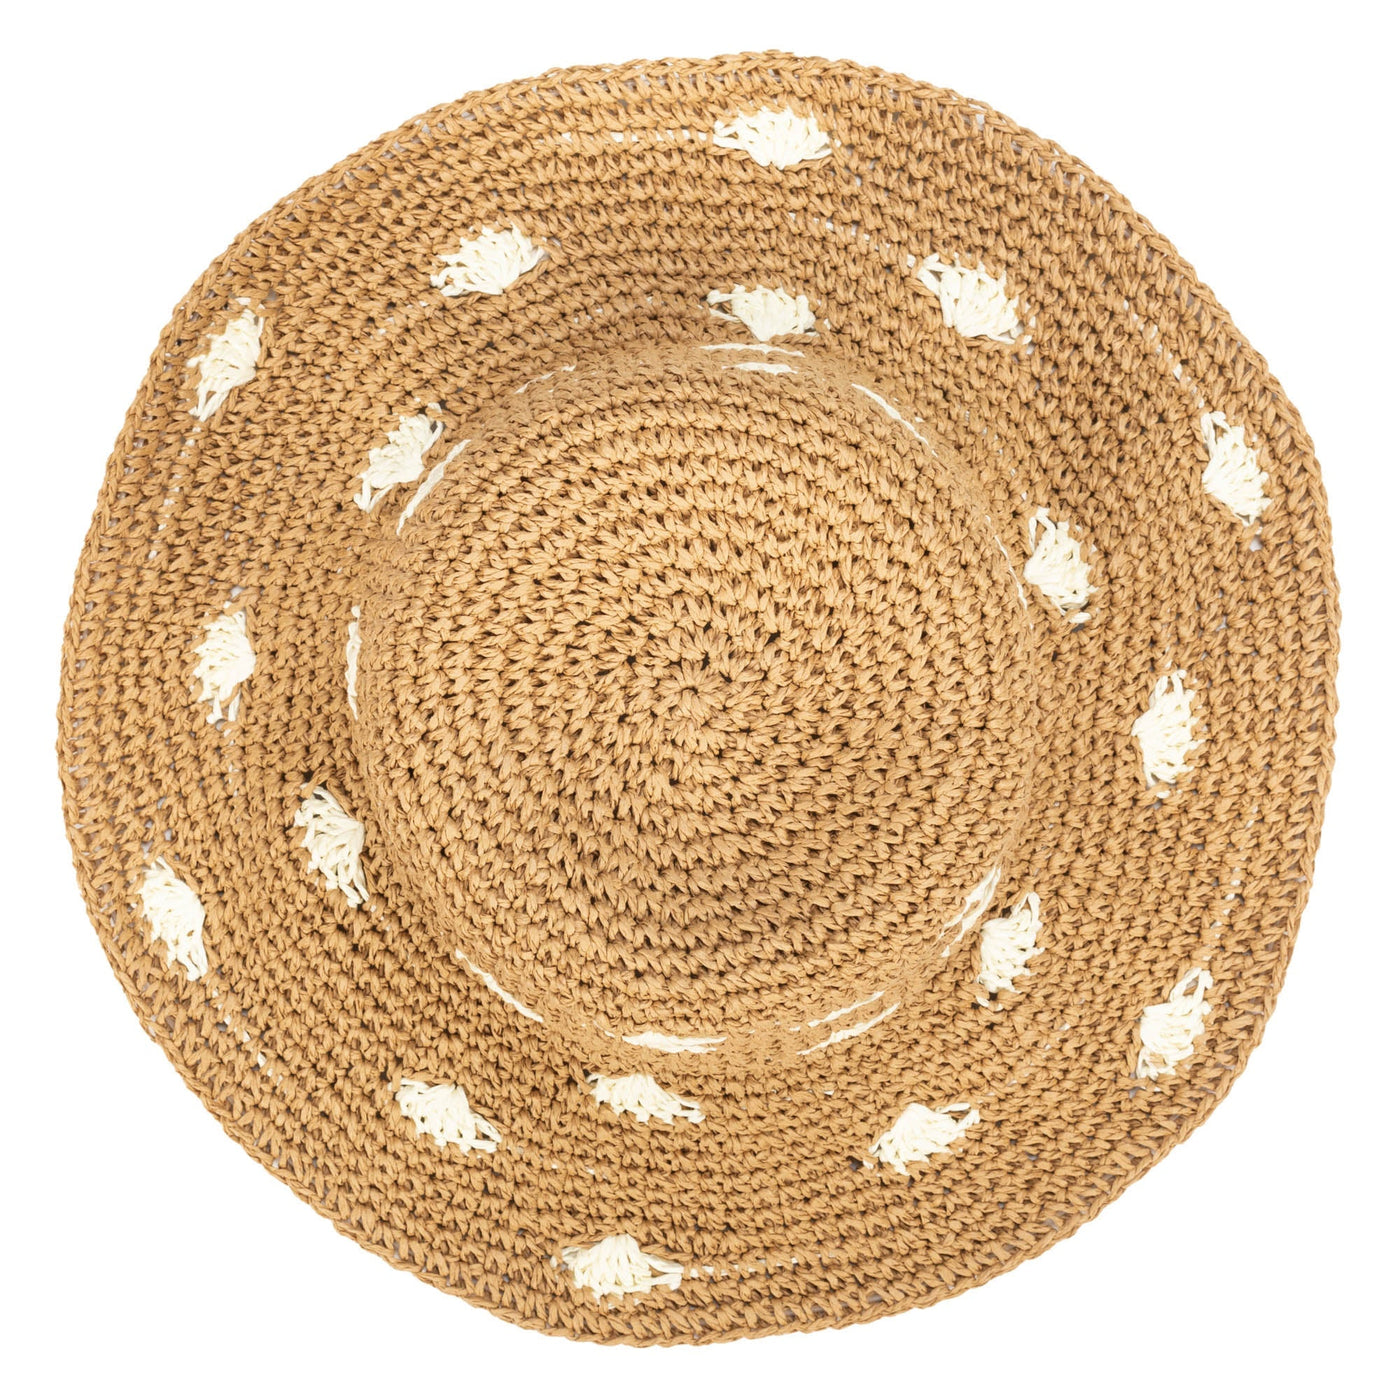 BUCKET - Dream On - Paper Crochet Polka Dot Bucket